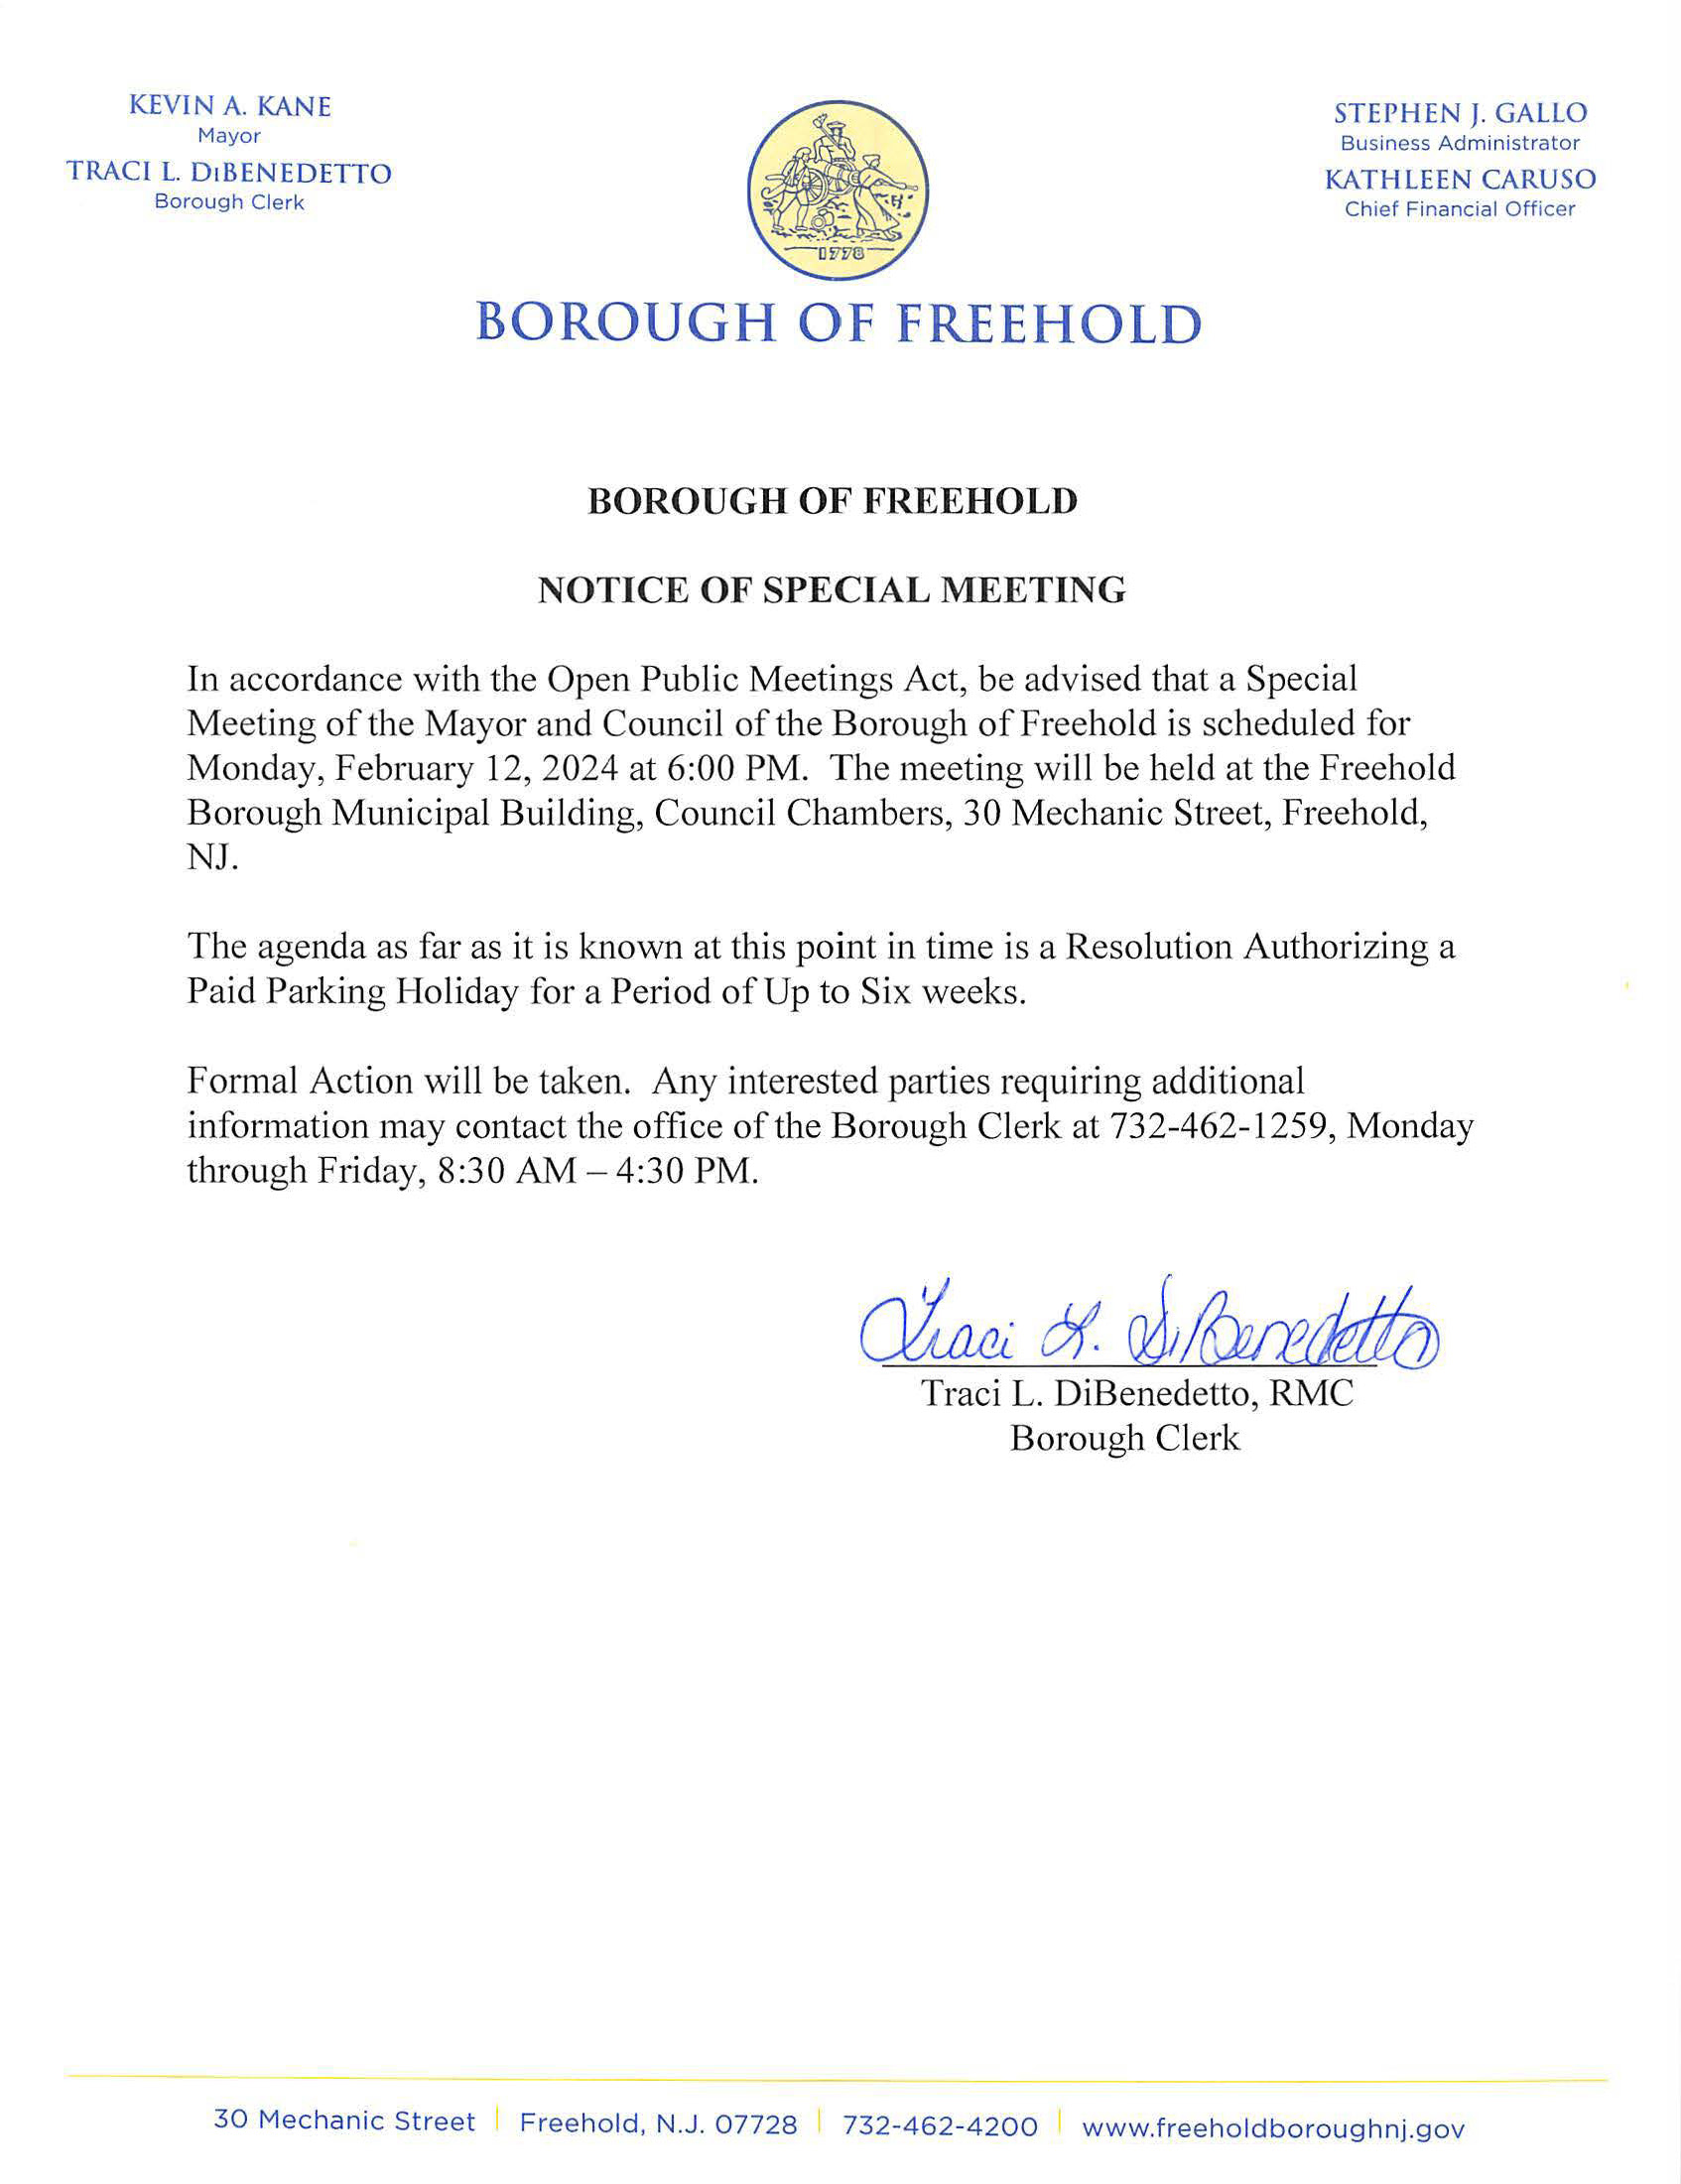 Special Meeting Notice